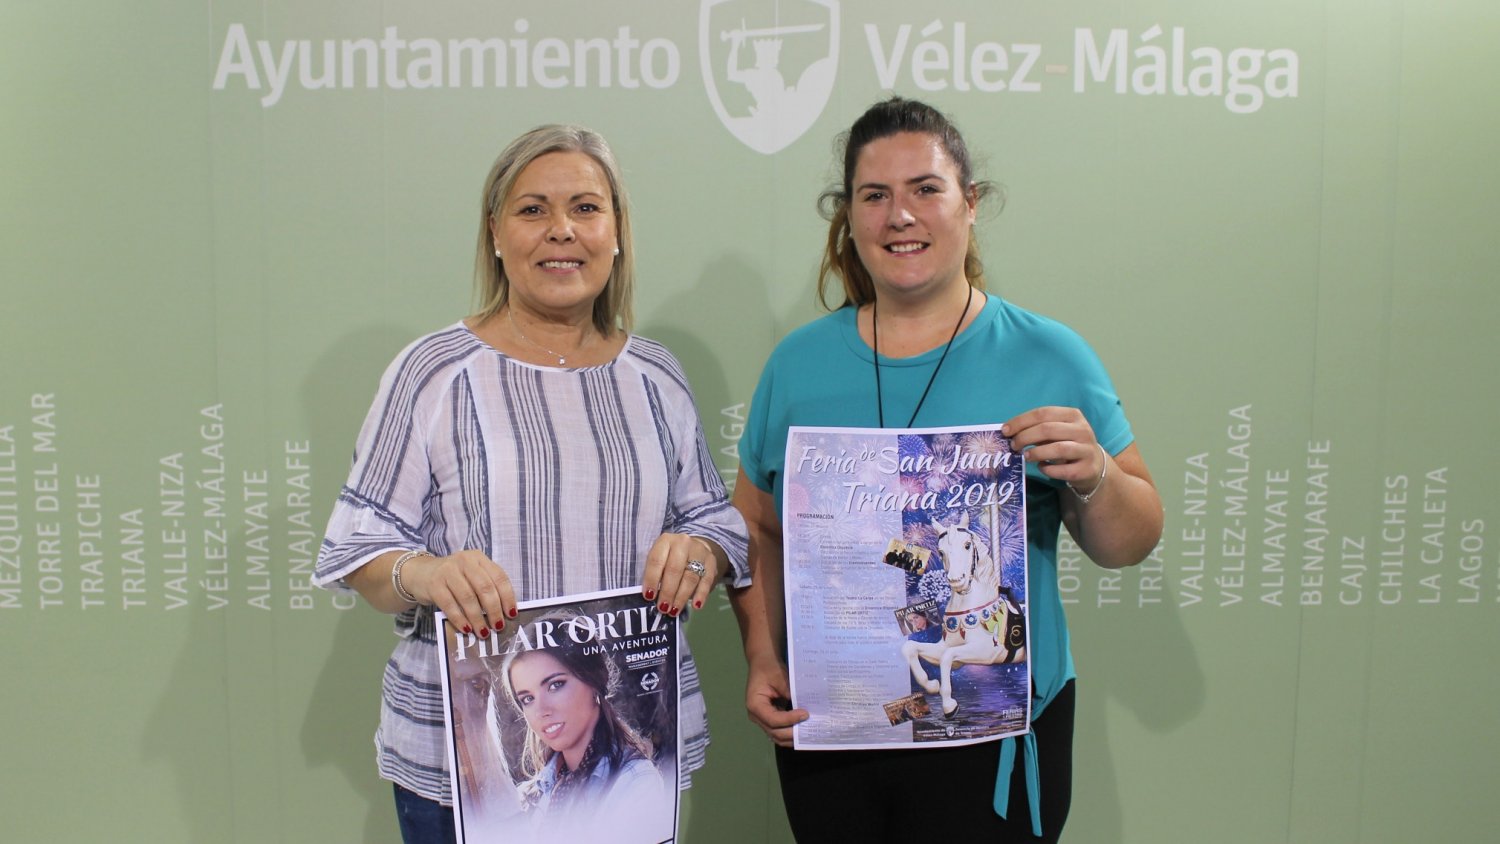 Pilar Ortiz y Christian Martín actuarán en la 'Feria San Juan de Triana' de Vélez Málaga